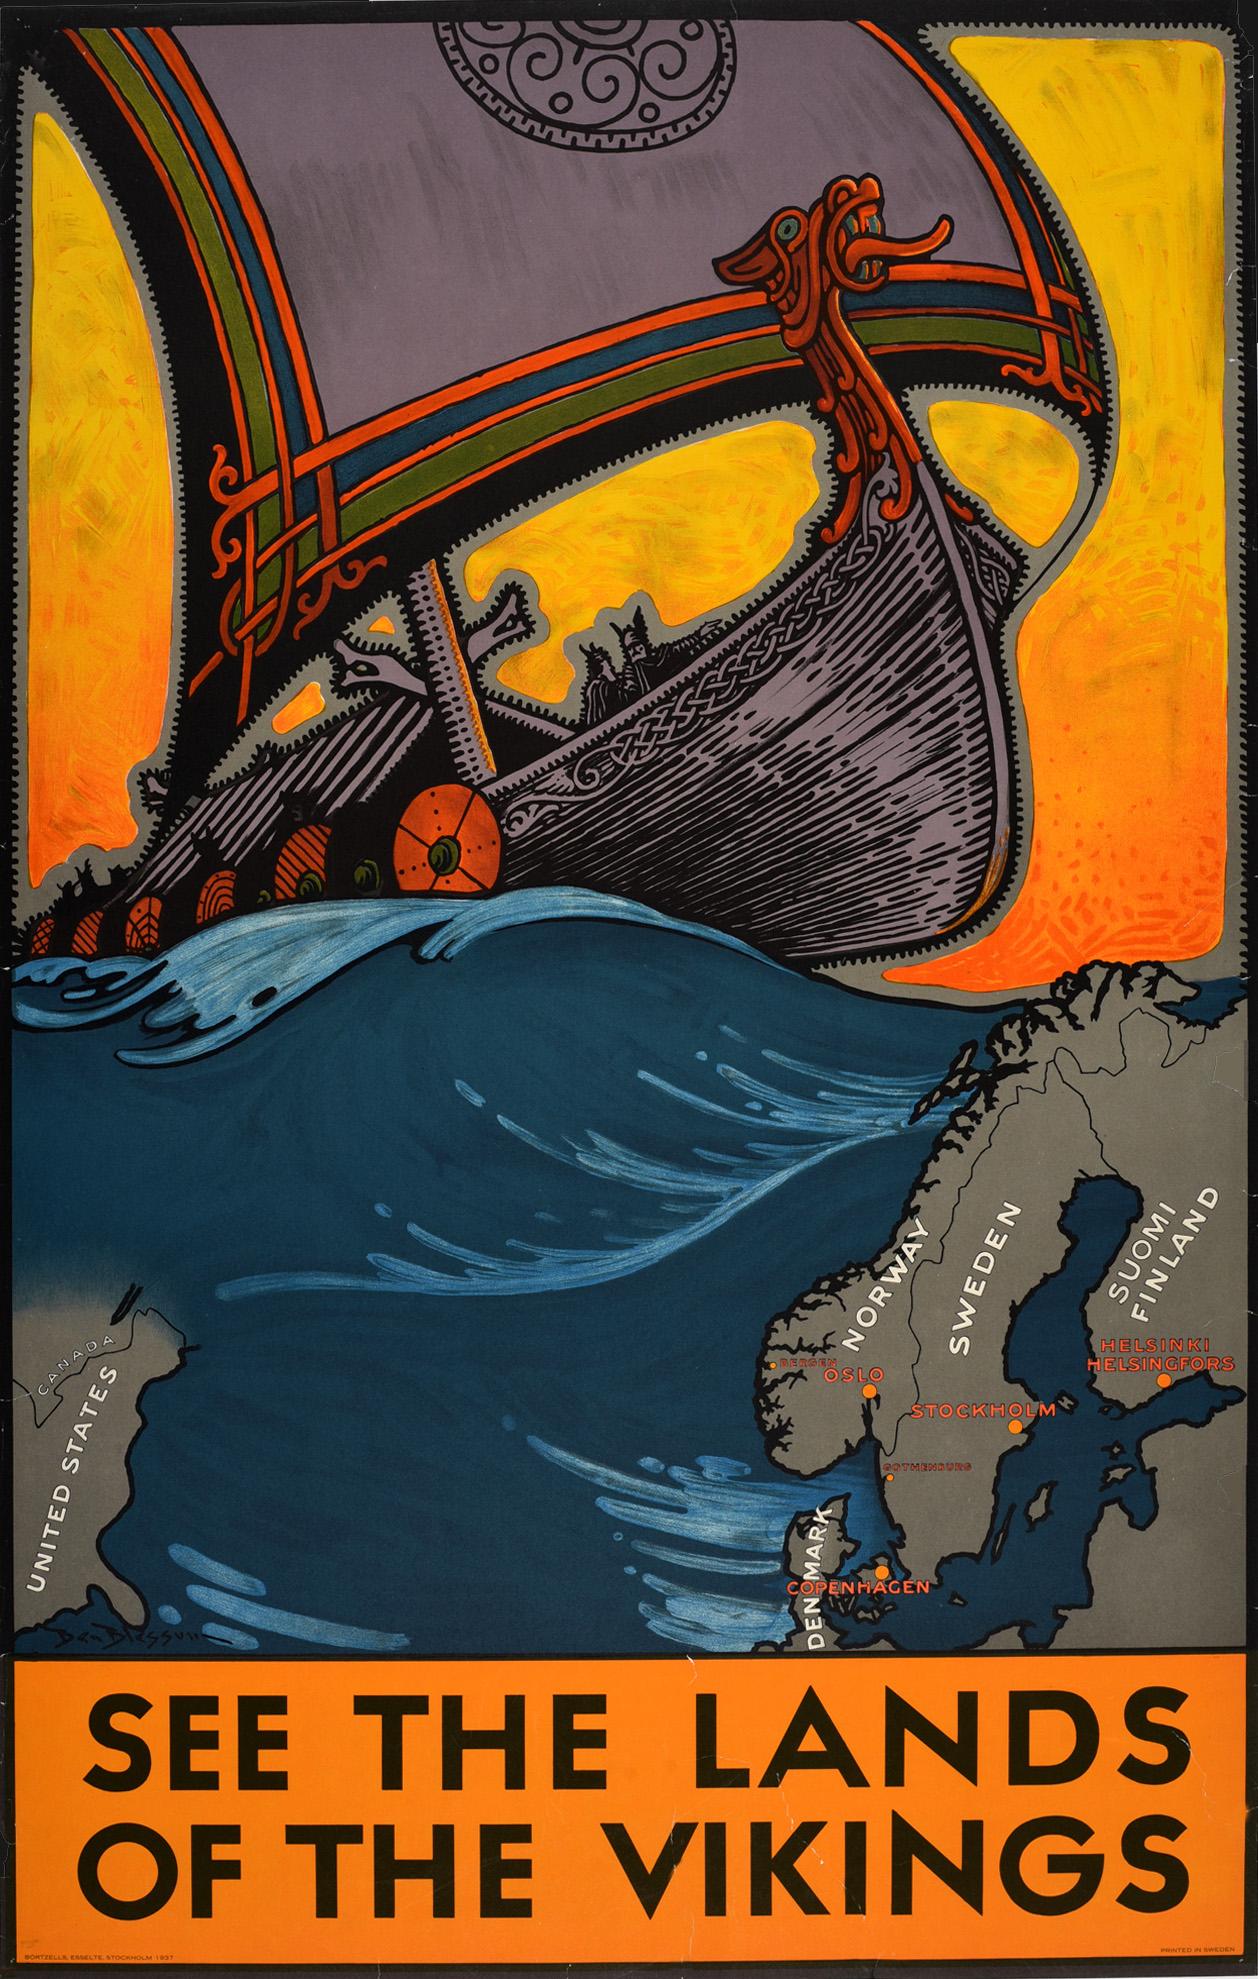 Benjamin Blessum Print - Original Vintage Travel Poster See The Lands Of The Vikings Atlantic Sailing Map